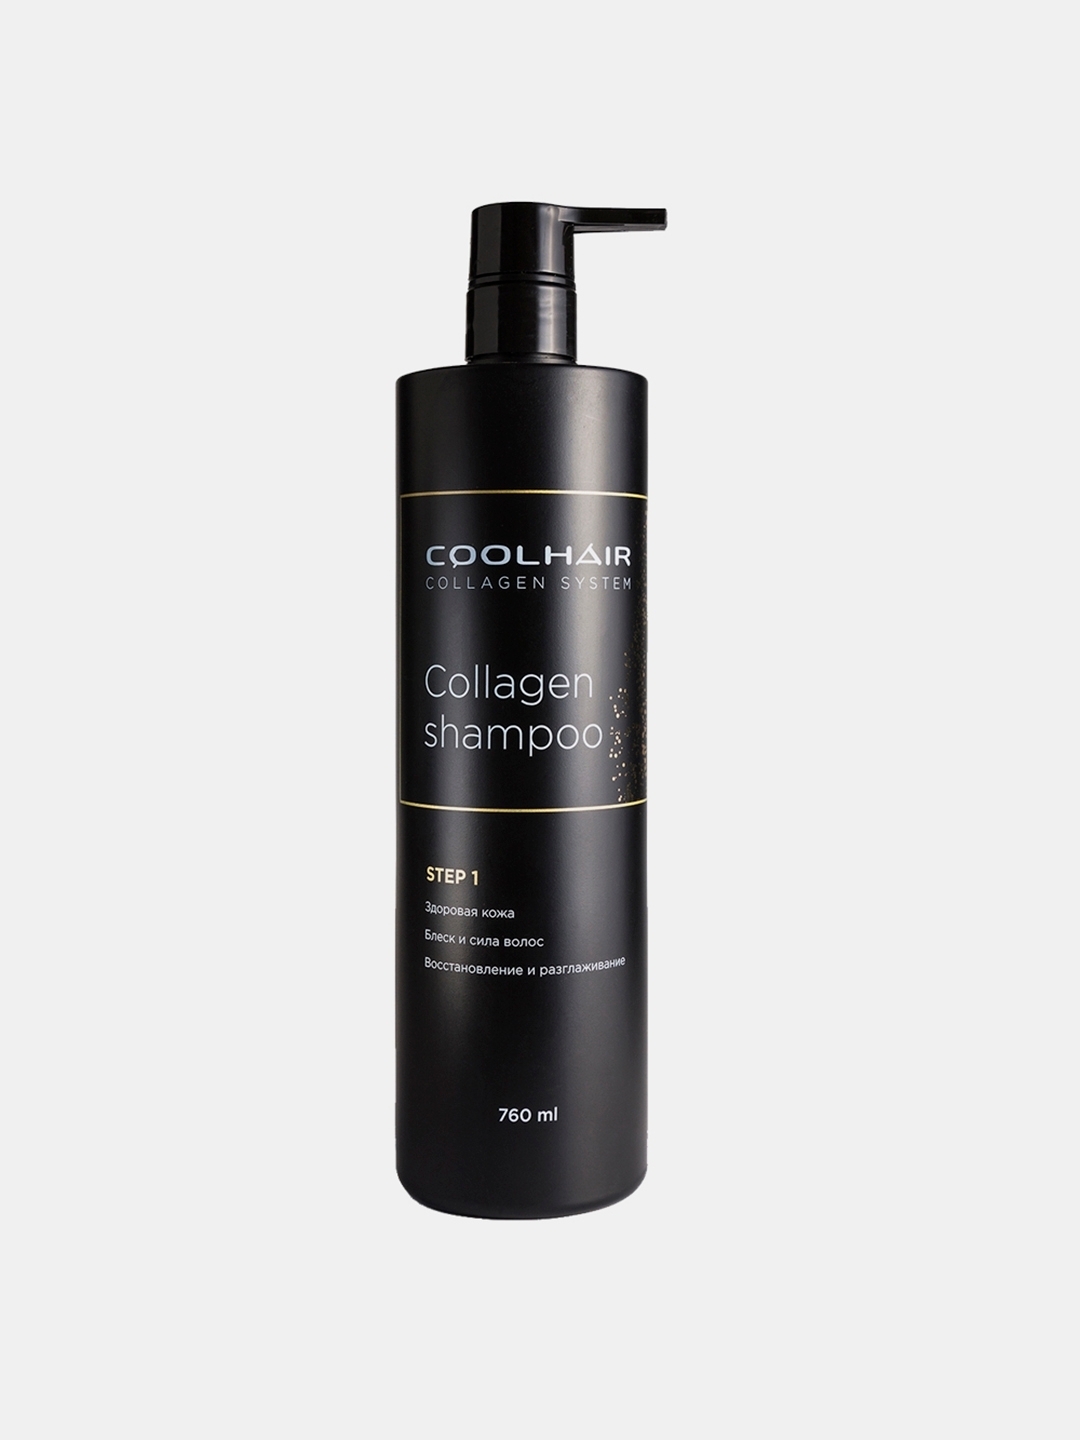 Коллаген для роста волос. Coolhair Collagen System набор. Coolhair Collagen System маска для волос. Коллаген для волос. Шампунь coolhair.